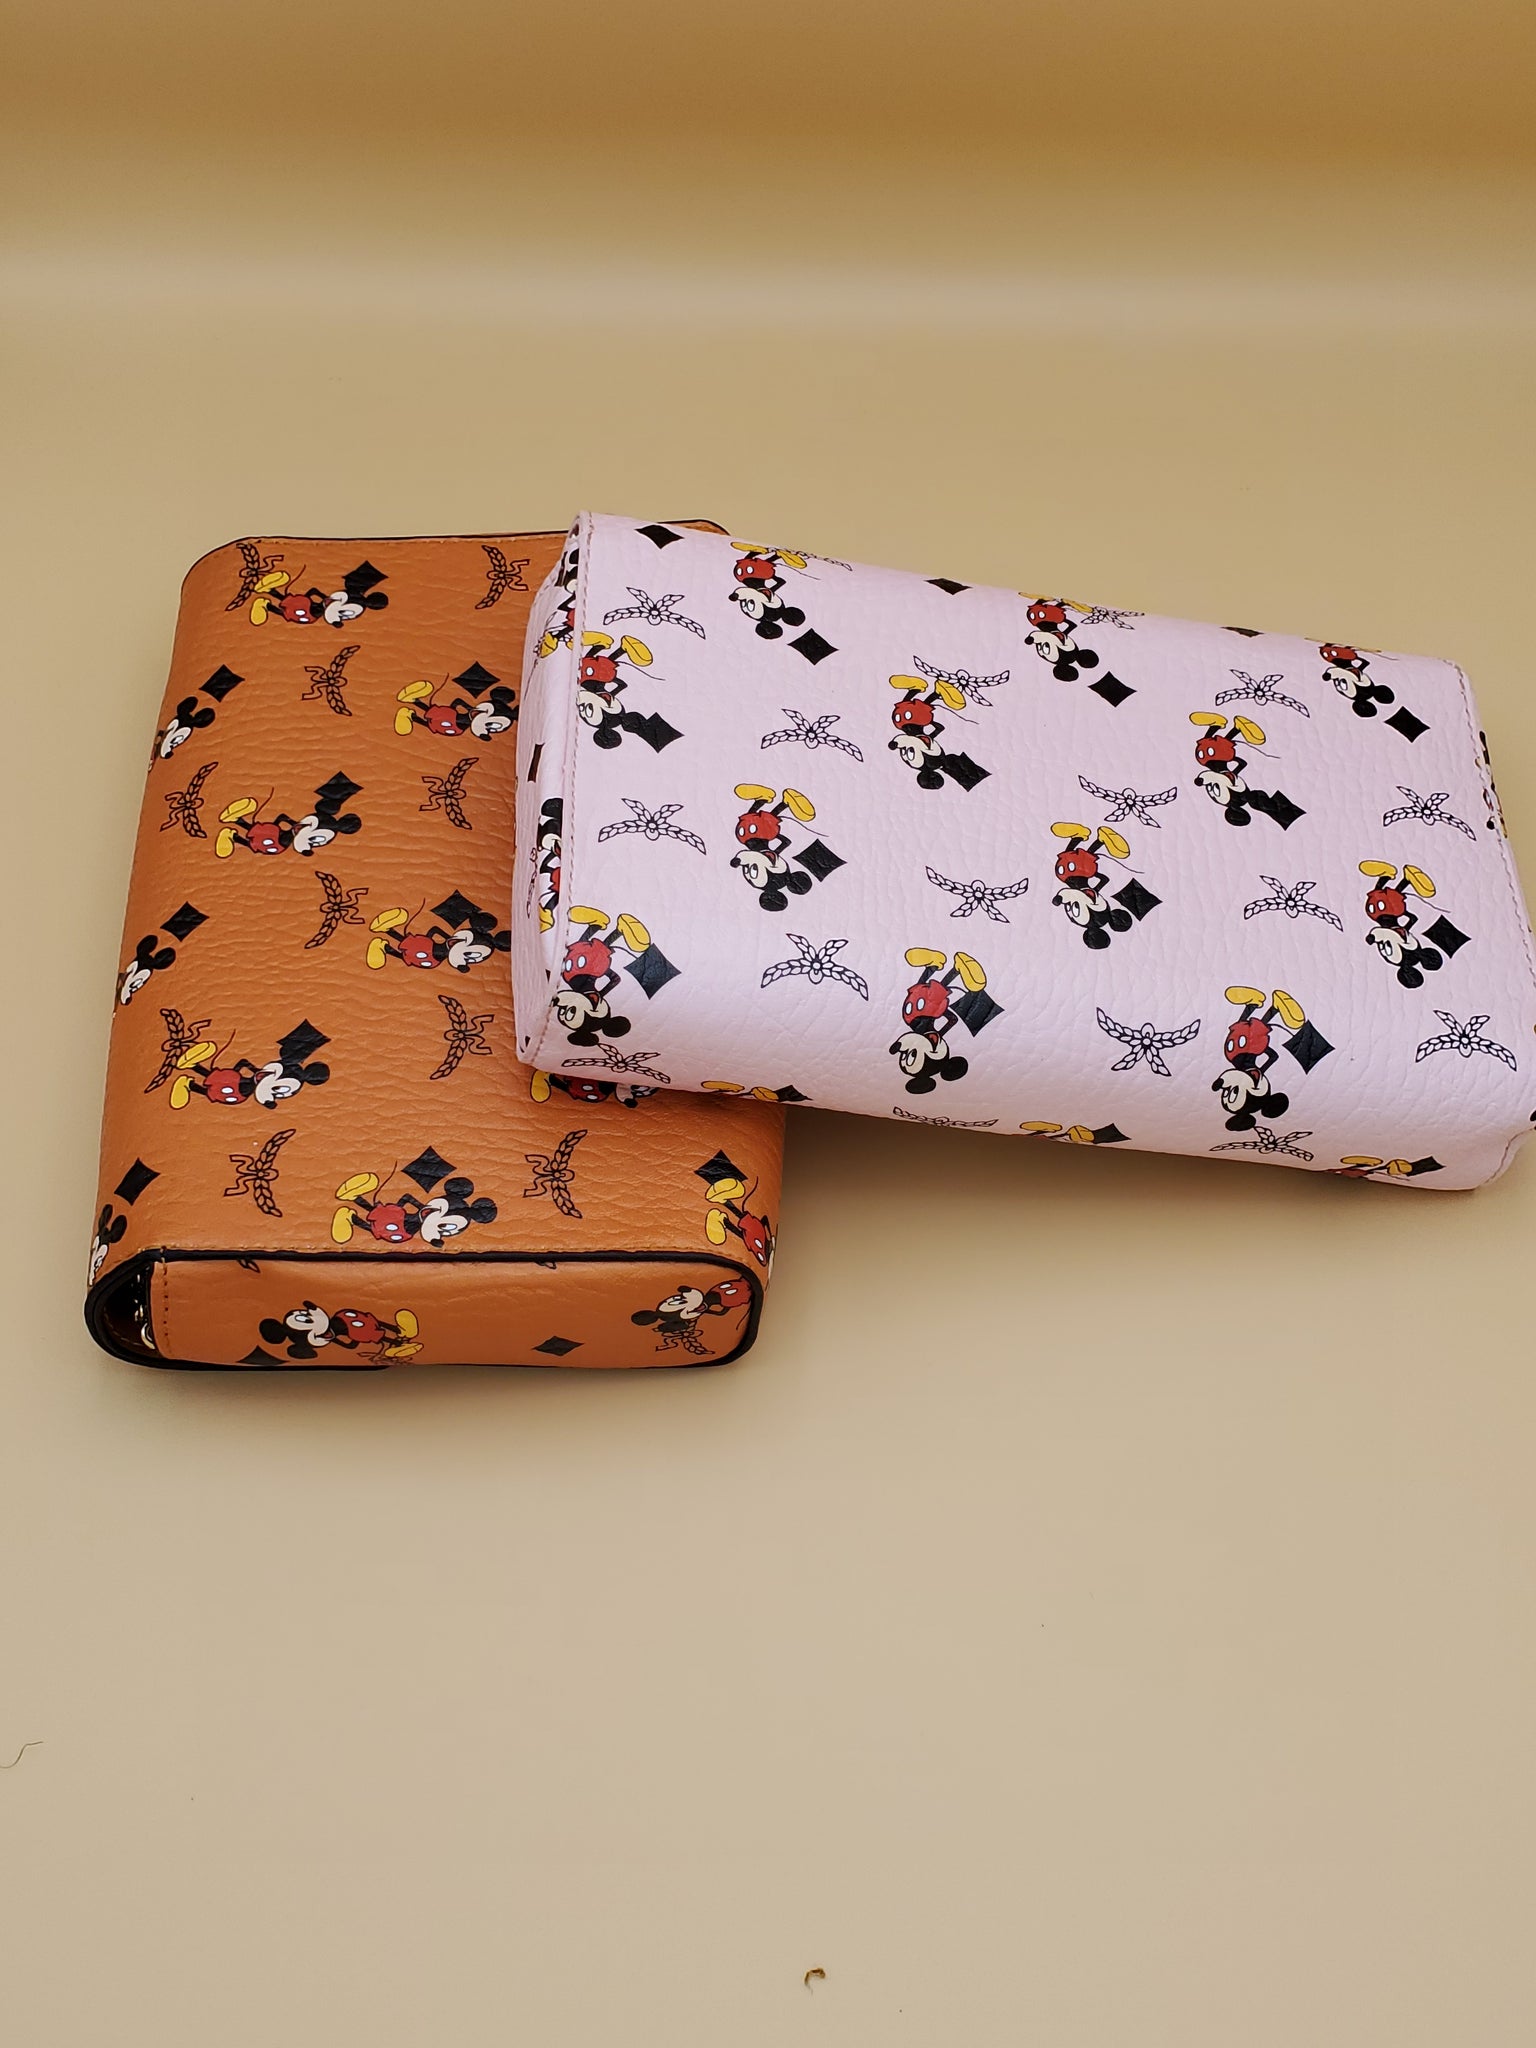 Mickey mouse crossbody shoulder handbags